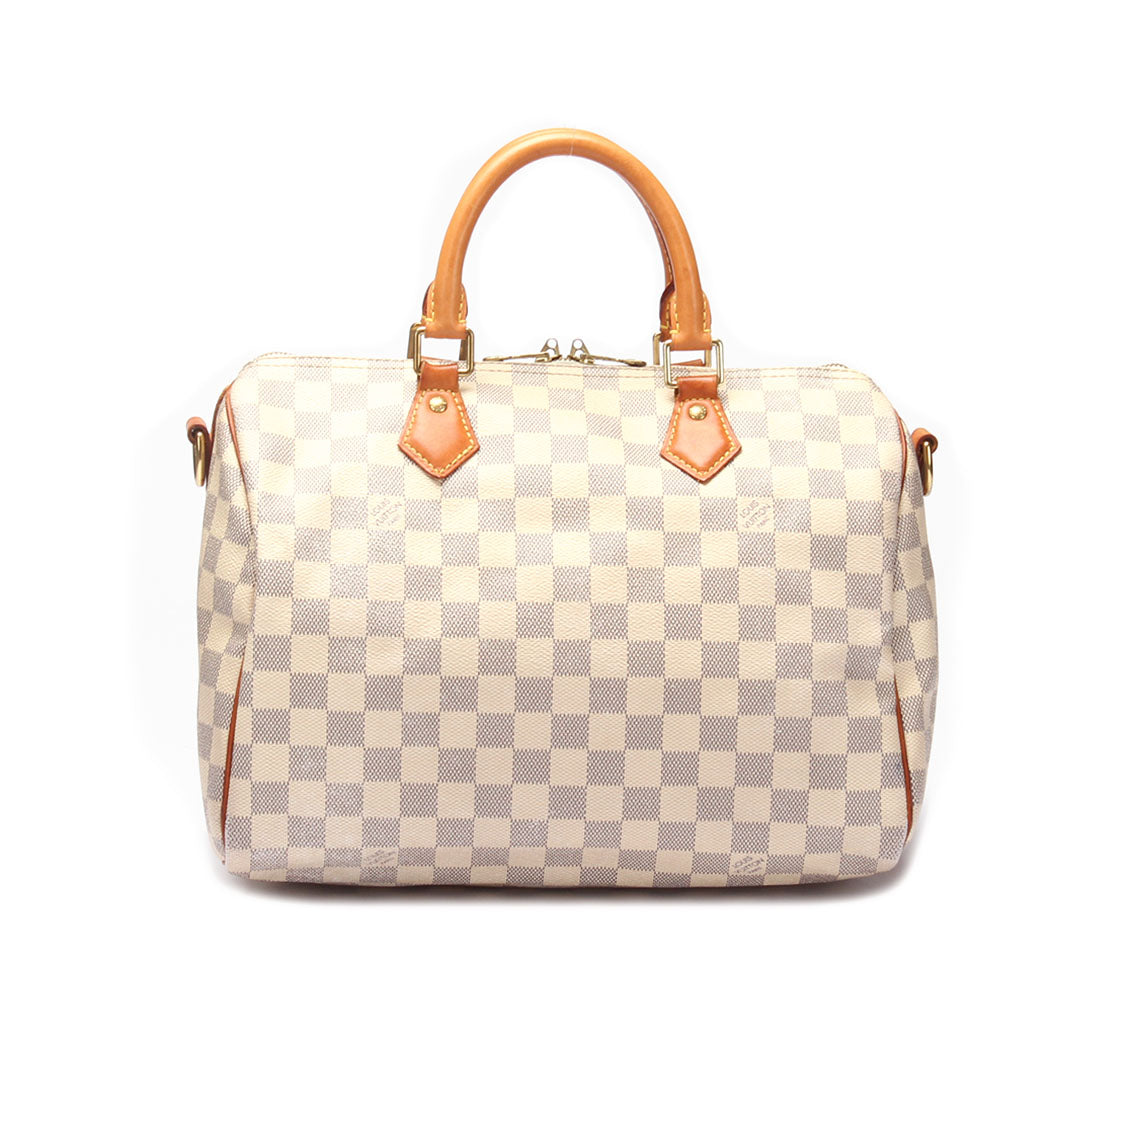 Louis Vuitton Damier Azur Speedy 30 Canvas Handbag in Good condition